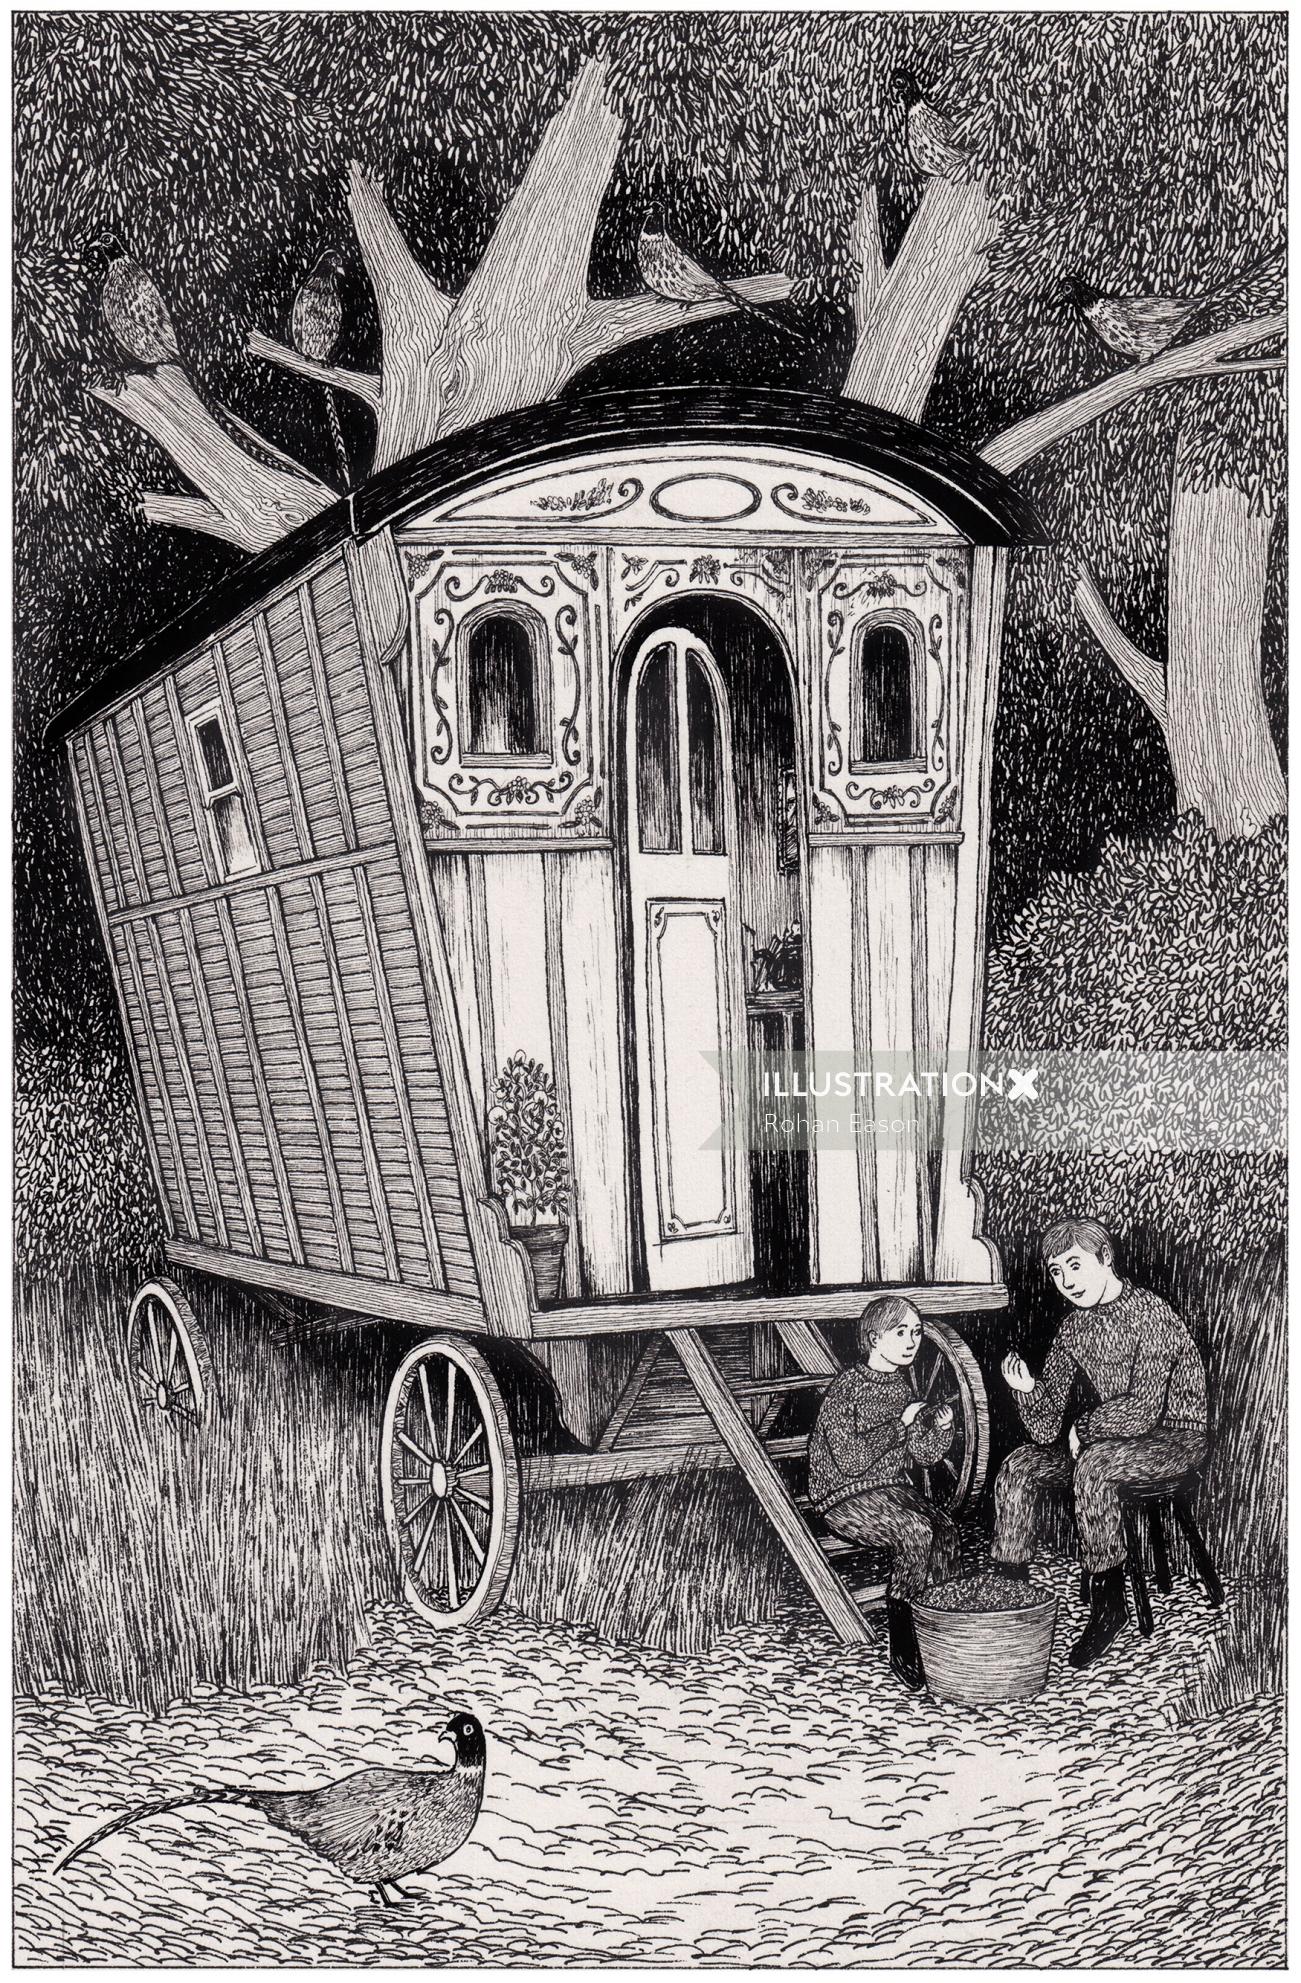 Black & White illustration of a cart
